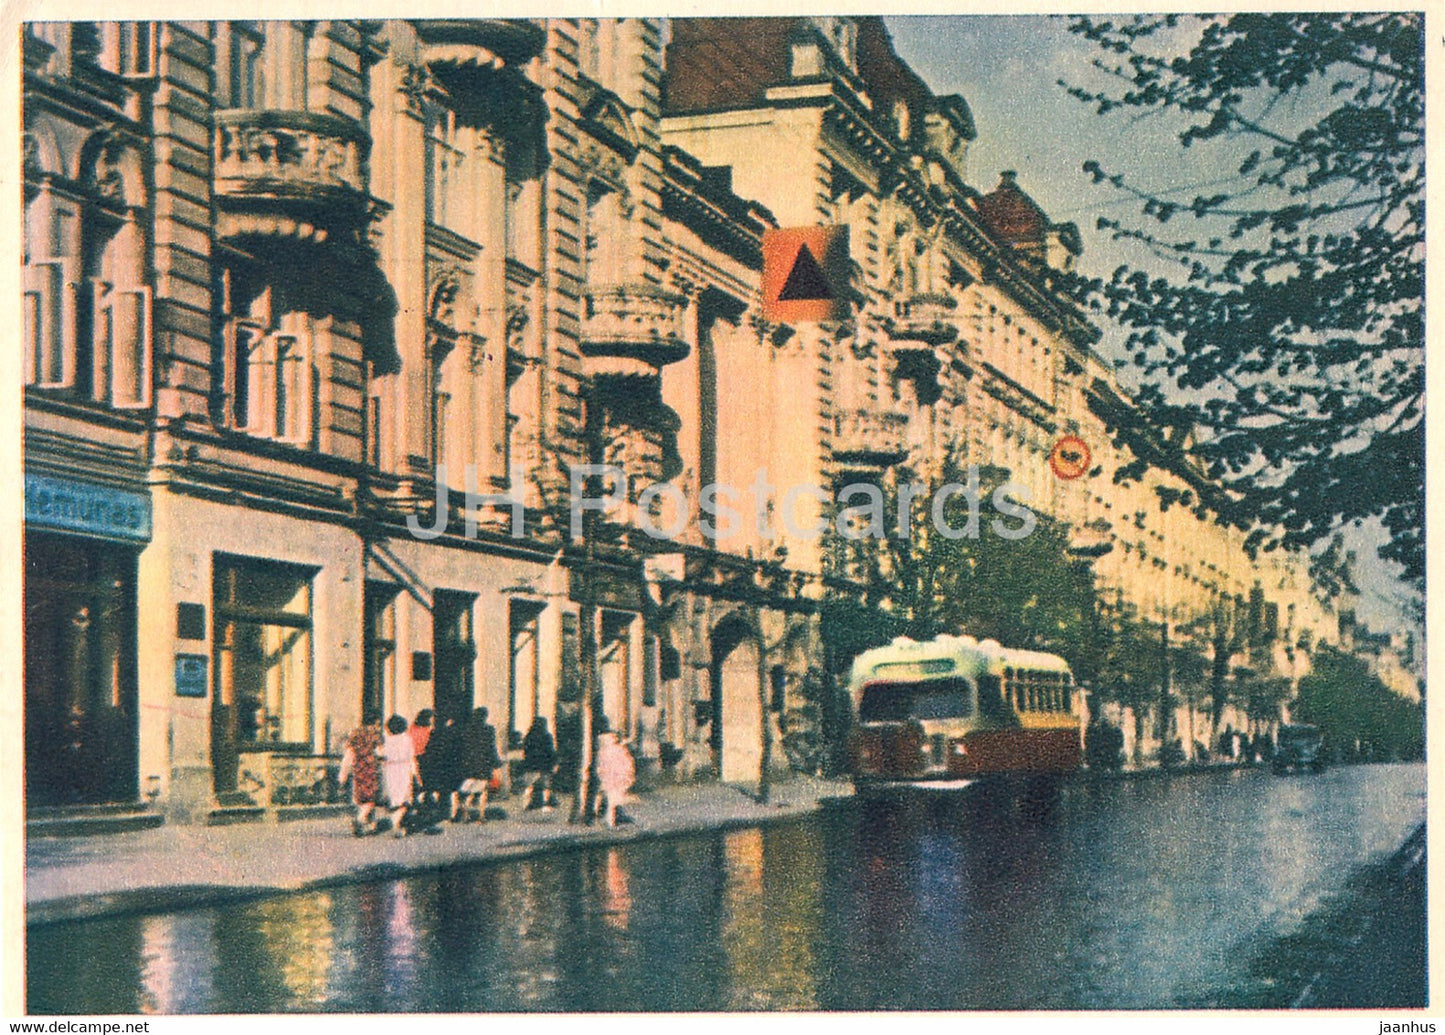 Vilnius - Stalin prospekt - avenue - bus - 1955 - Lithuania USSR - unused - JH Postcards